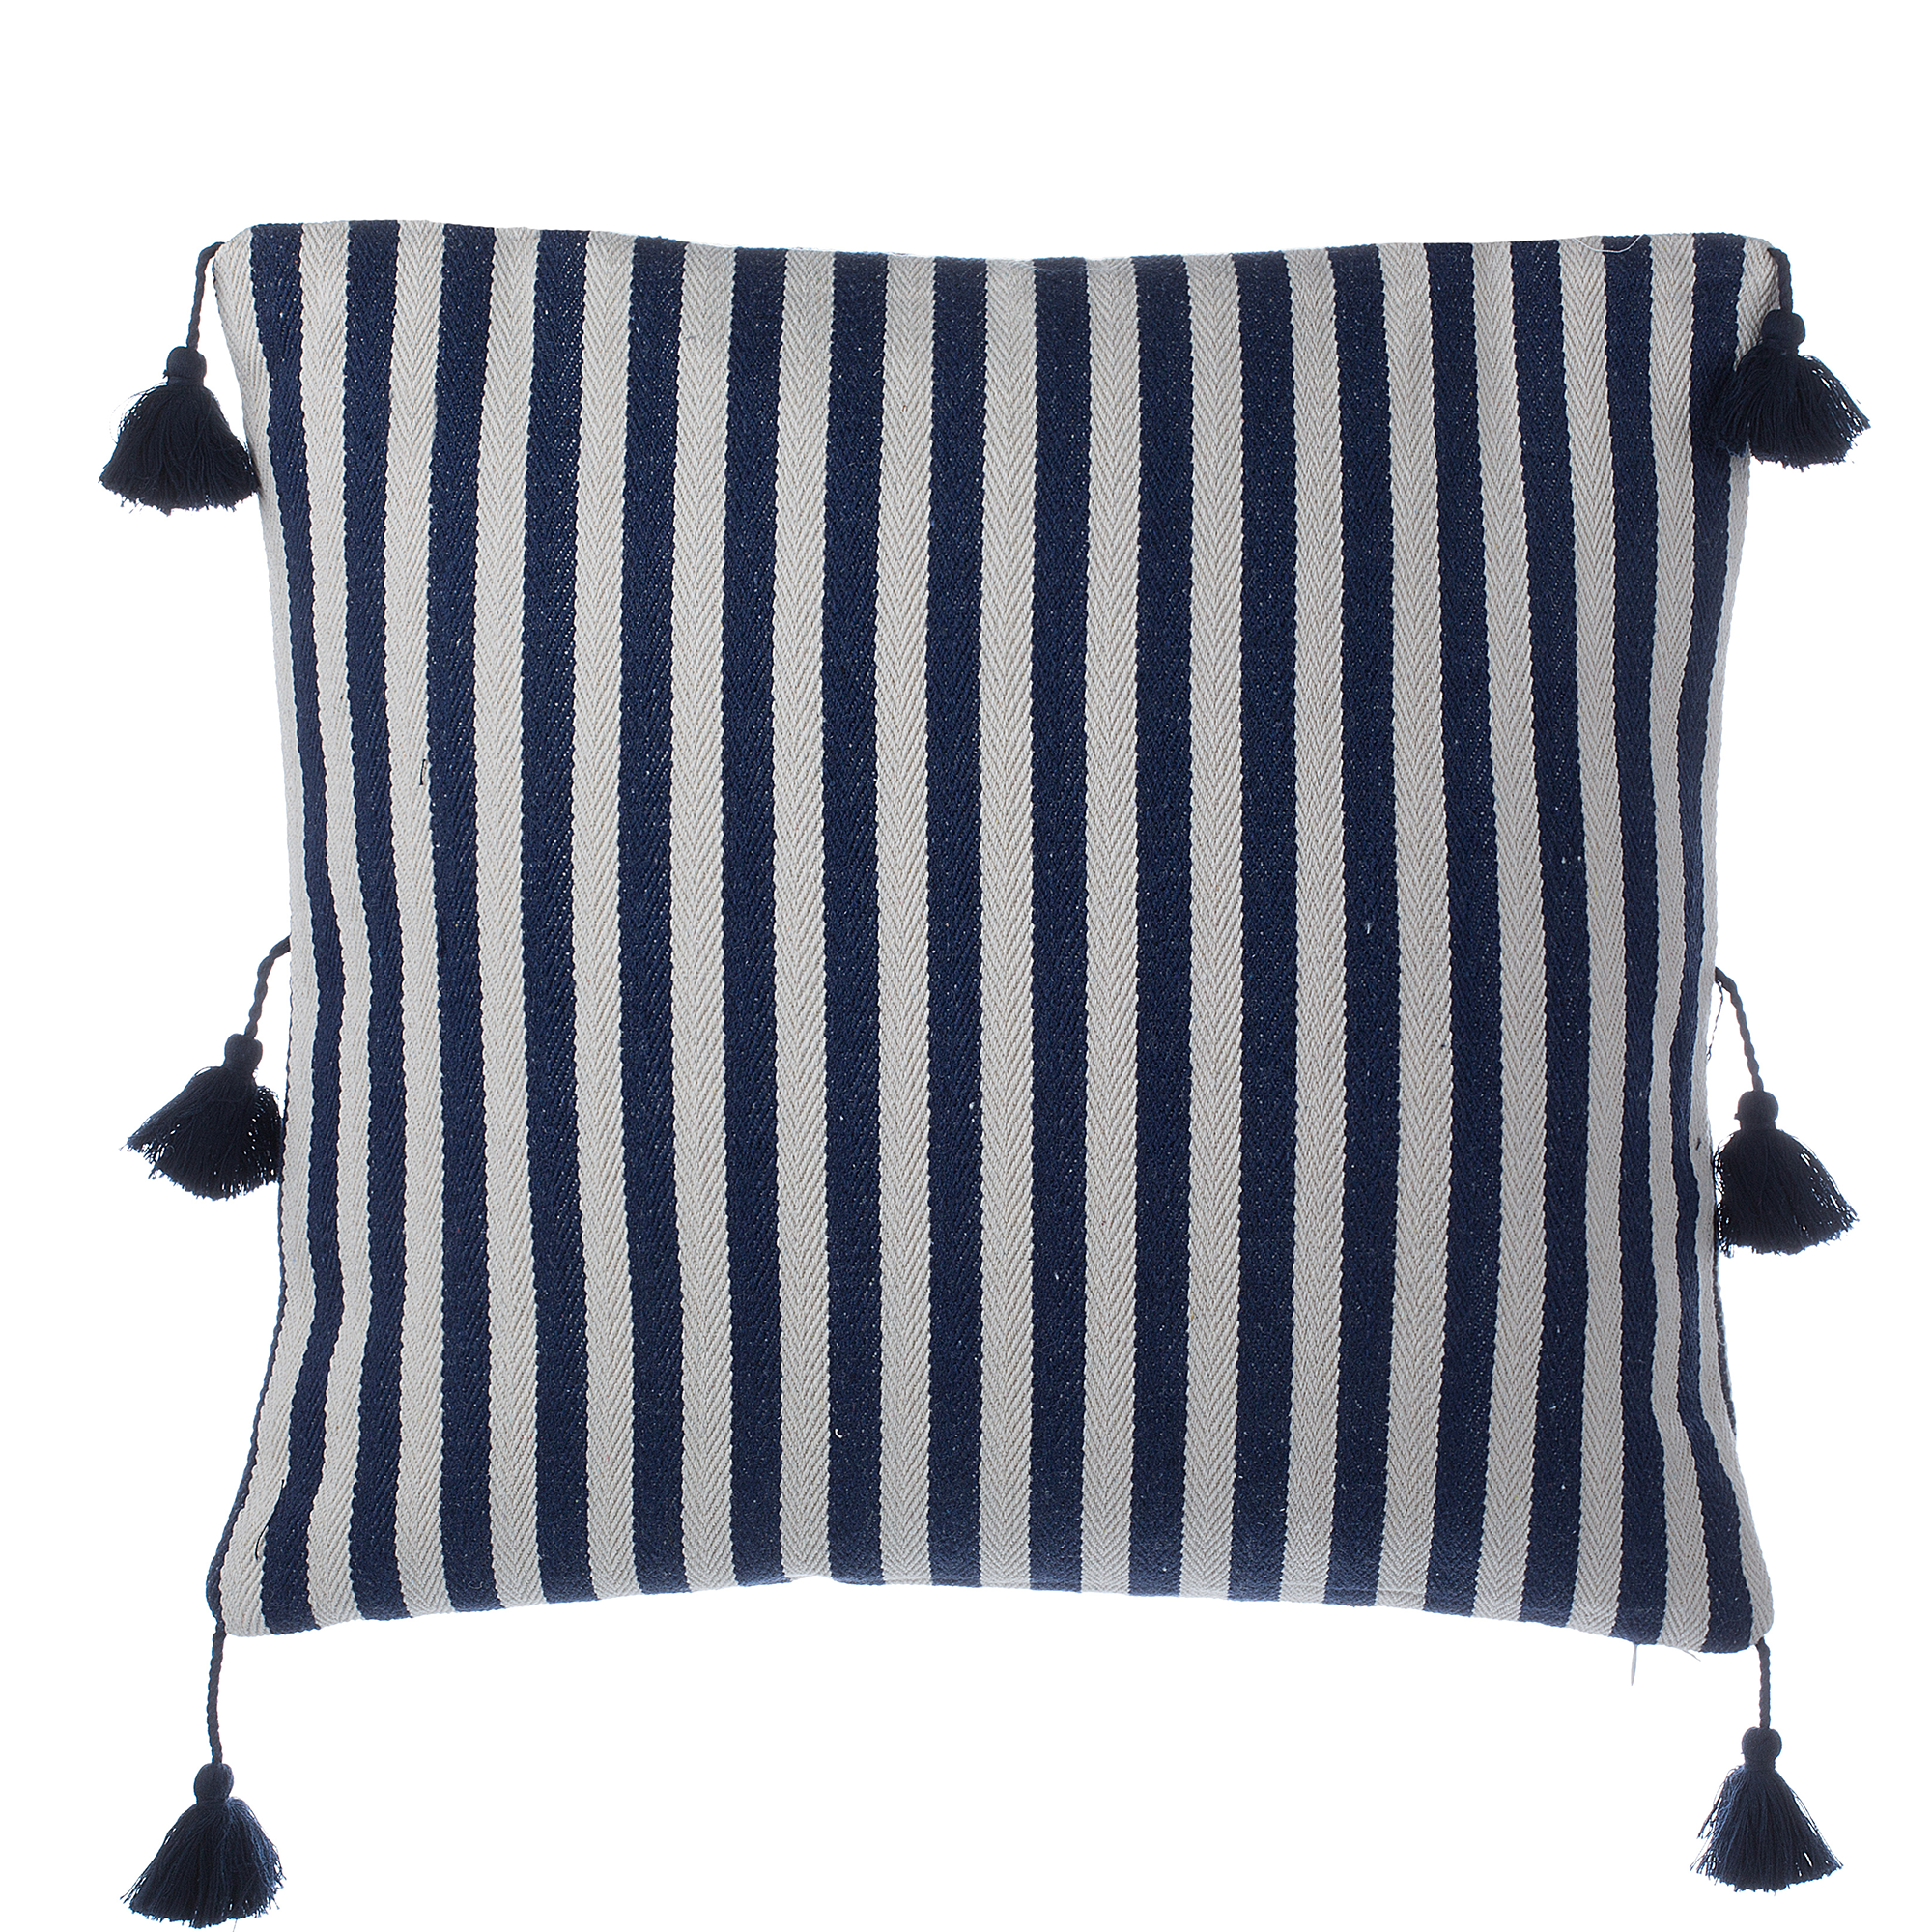 Beliani Decorative Cushion Blue Jacquard Striped Pattern 45 x 45 cm with Tassels Modern Boho Decor Accessories